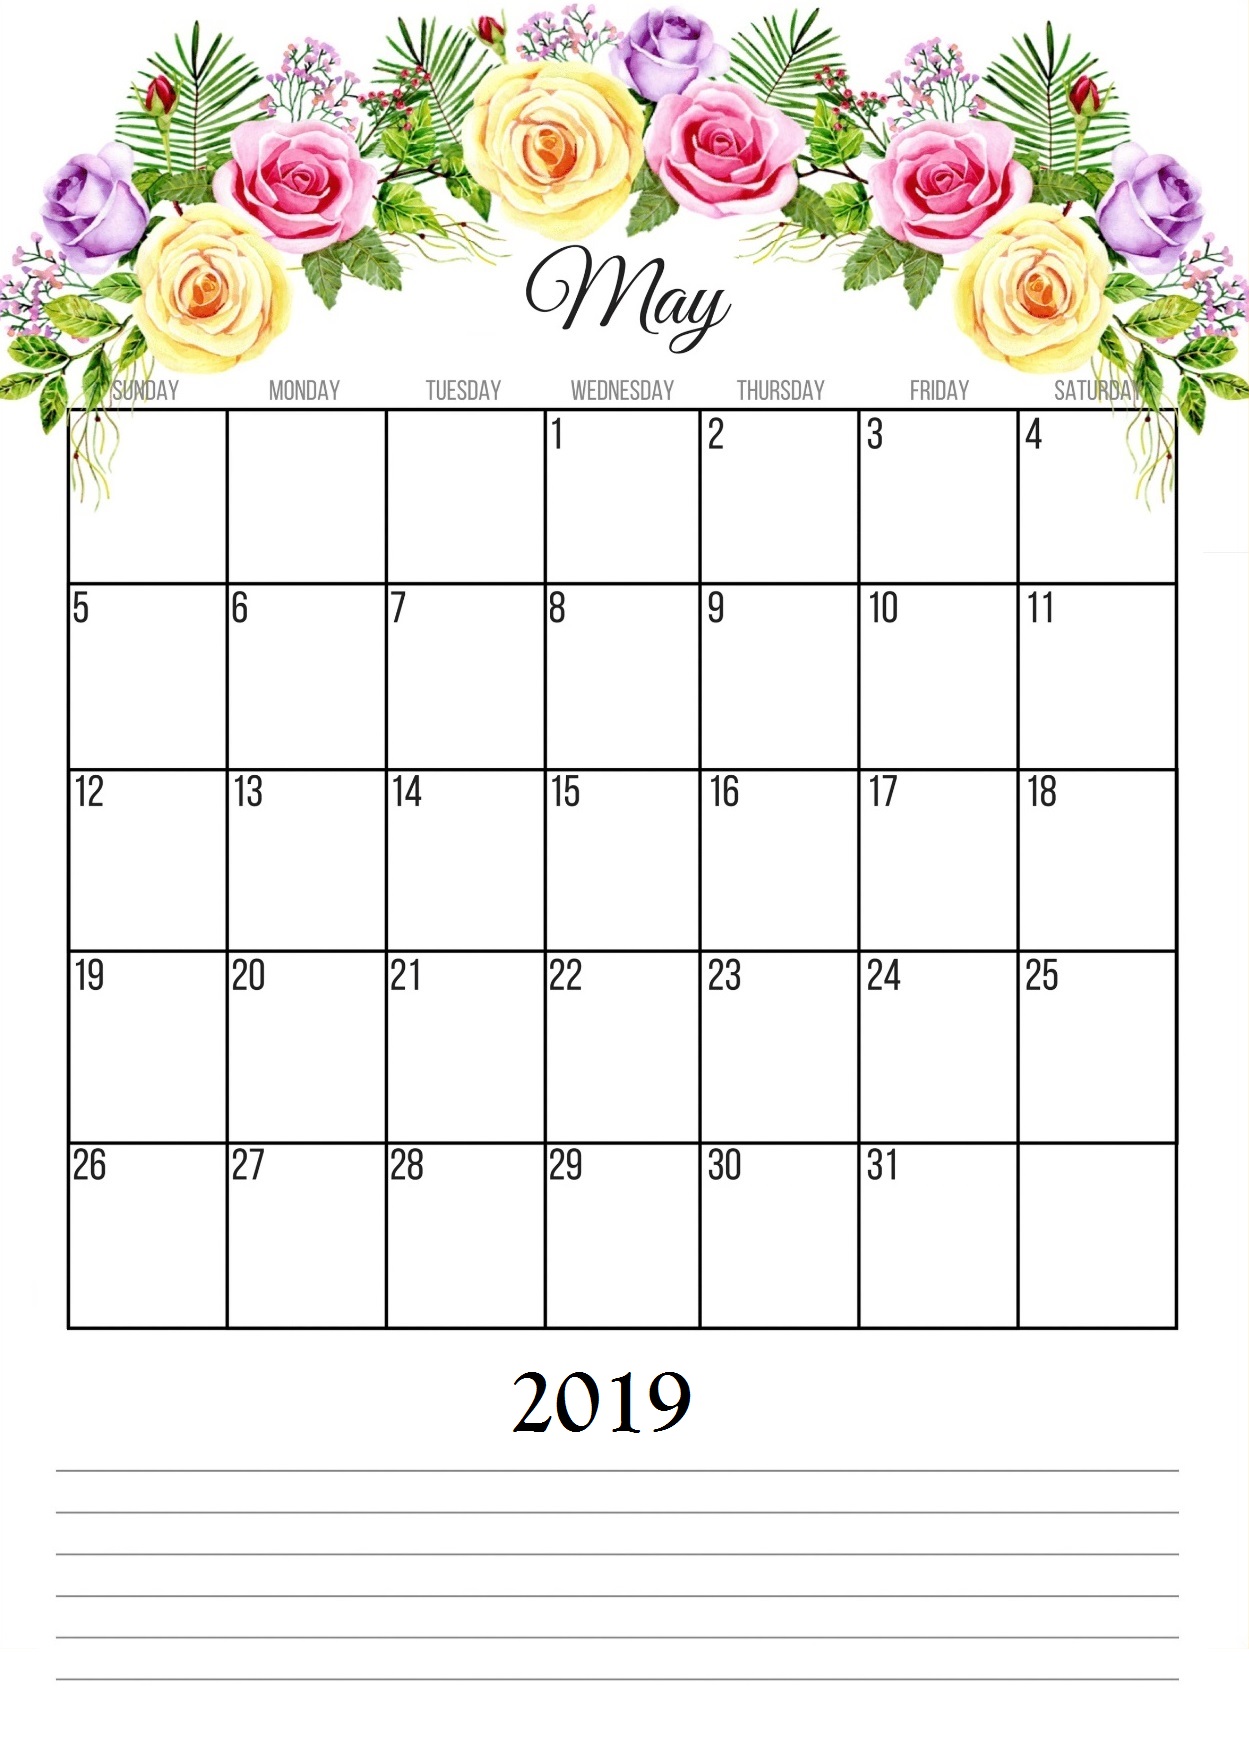 May 2019 Wall Calendar Template